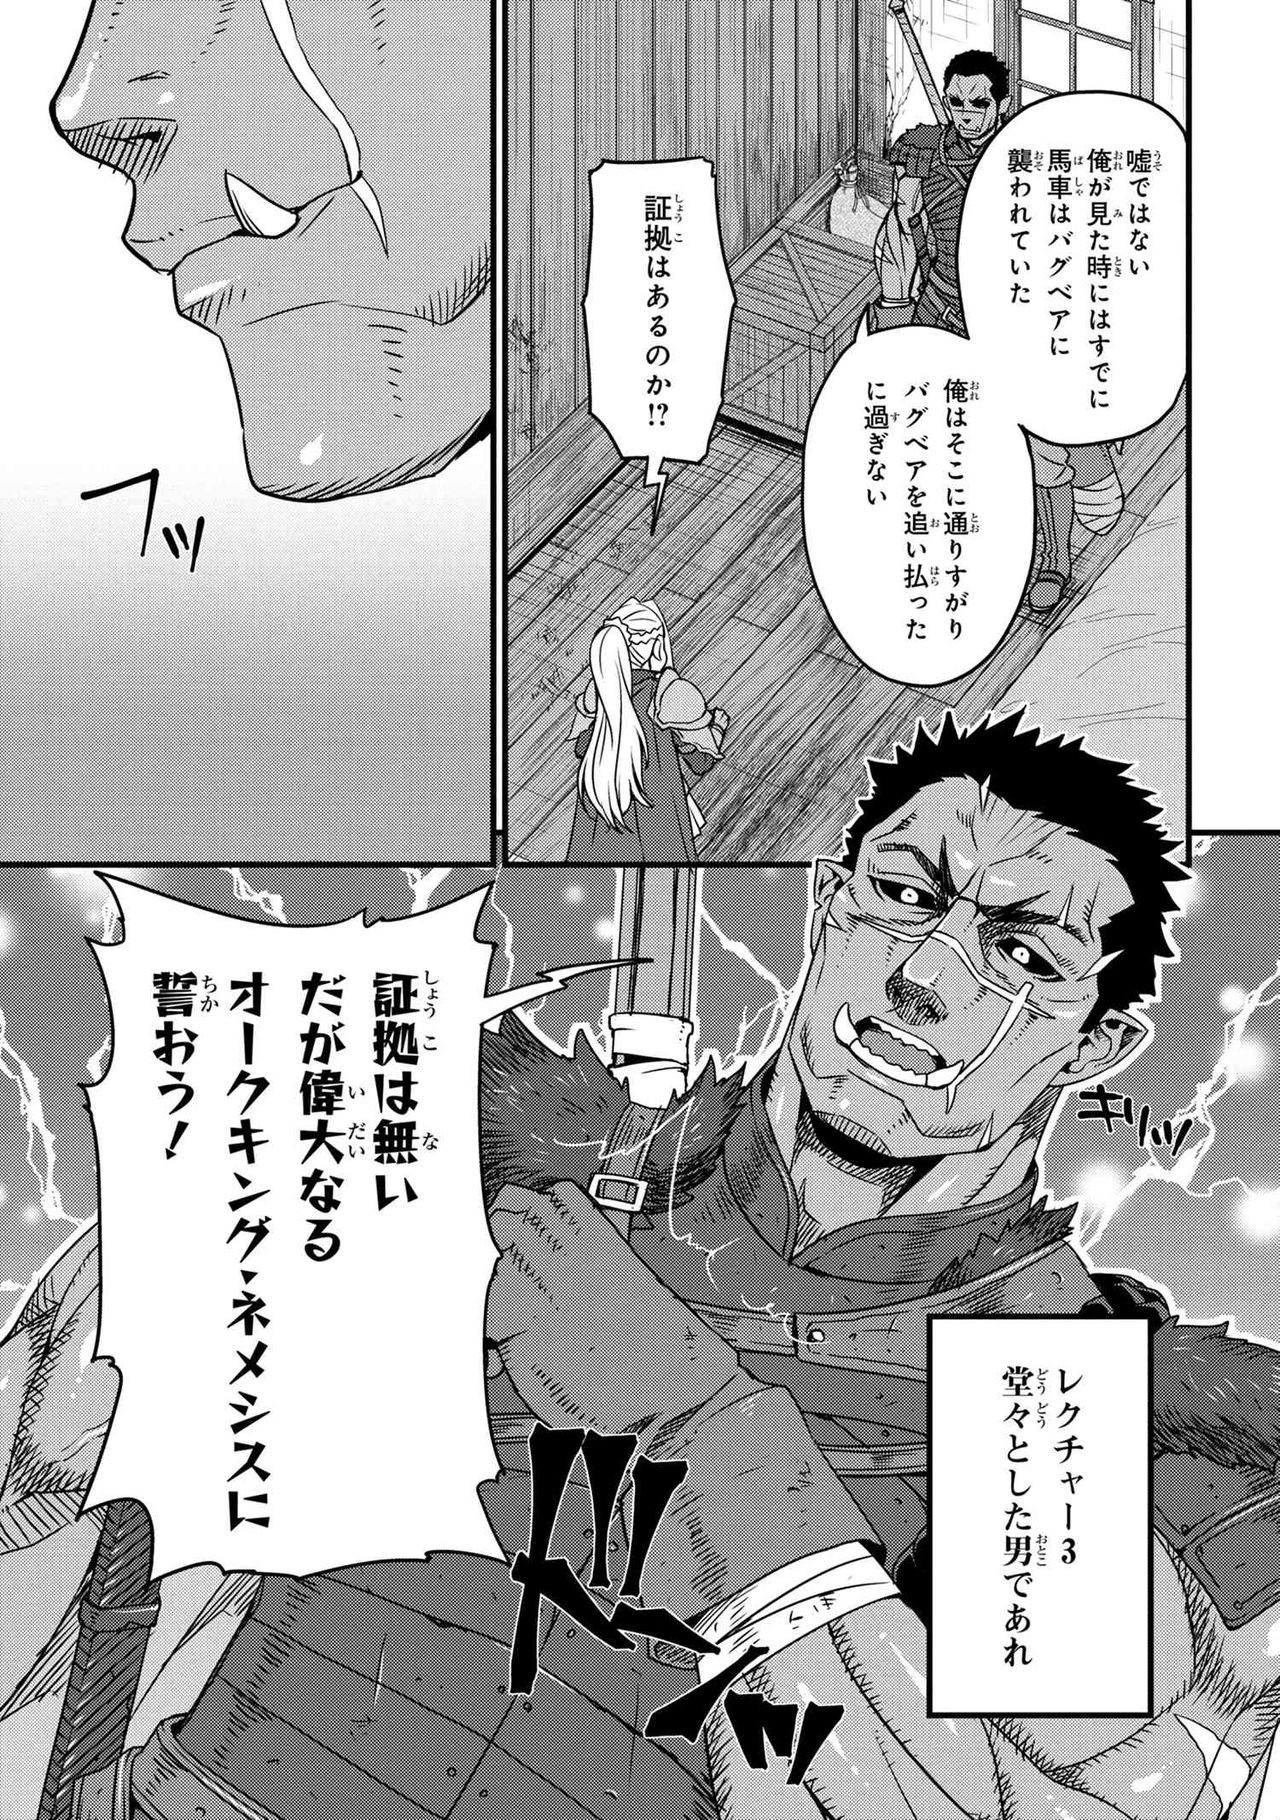 [Tsubakuro_U] Orc Hero Story - Discovery Chronicles Ch.2-1 (COMIC YAUP 2021-03-25) 4